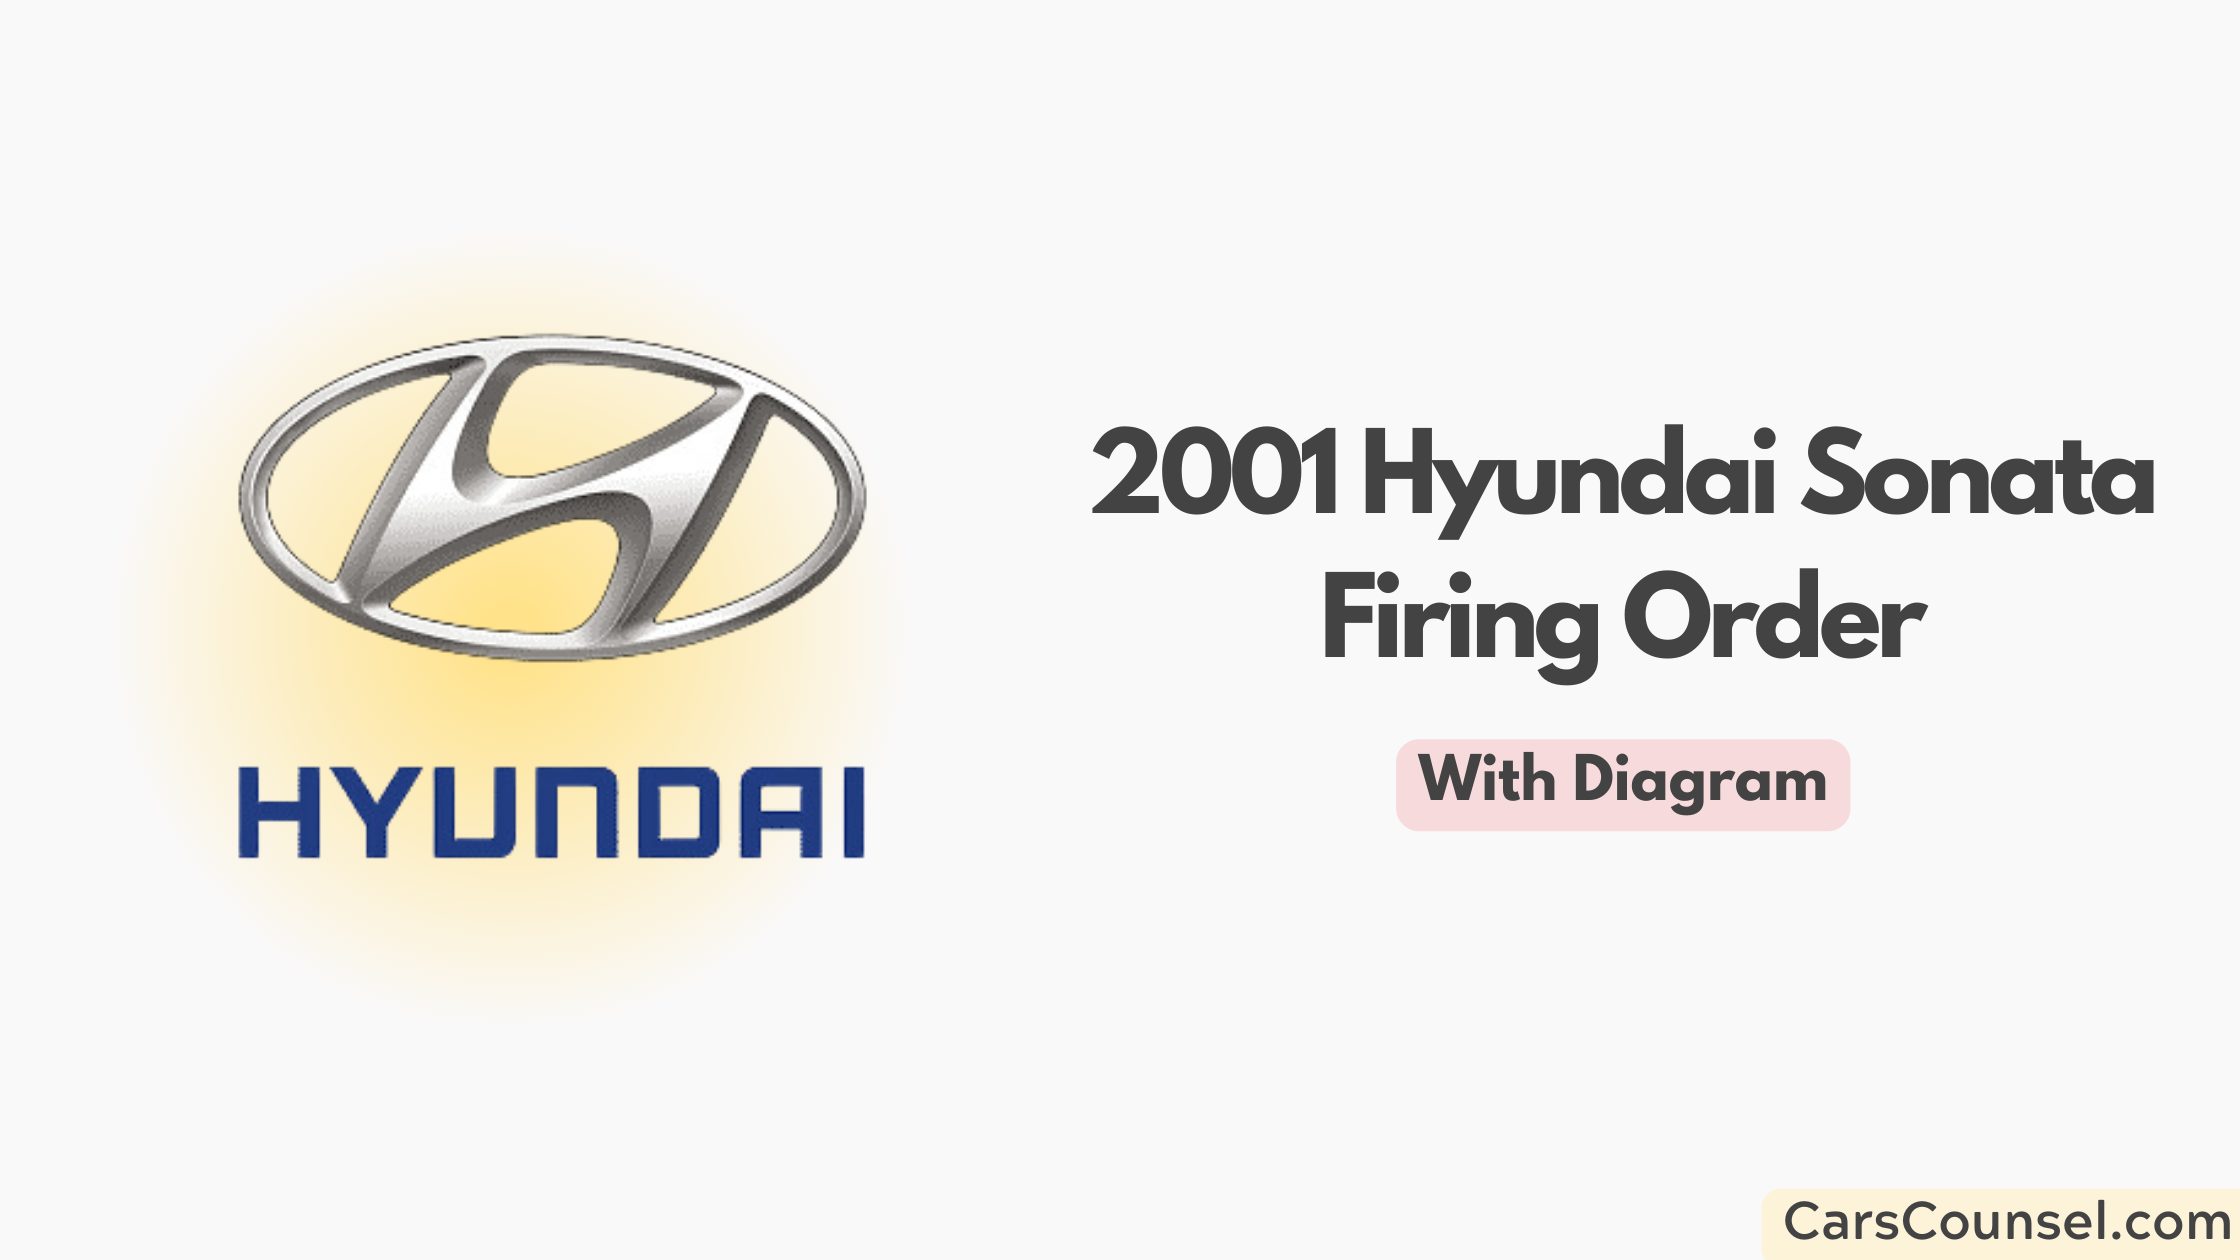 2001 Hyundai Sonata Firing Order With Diagram